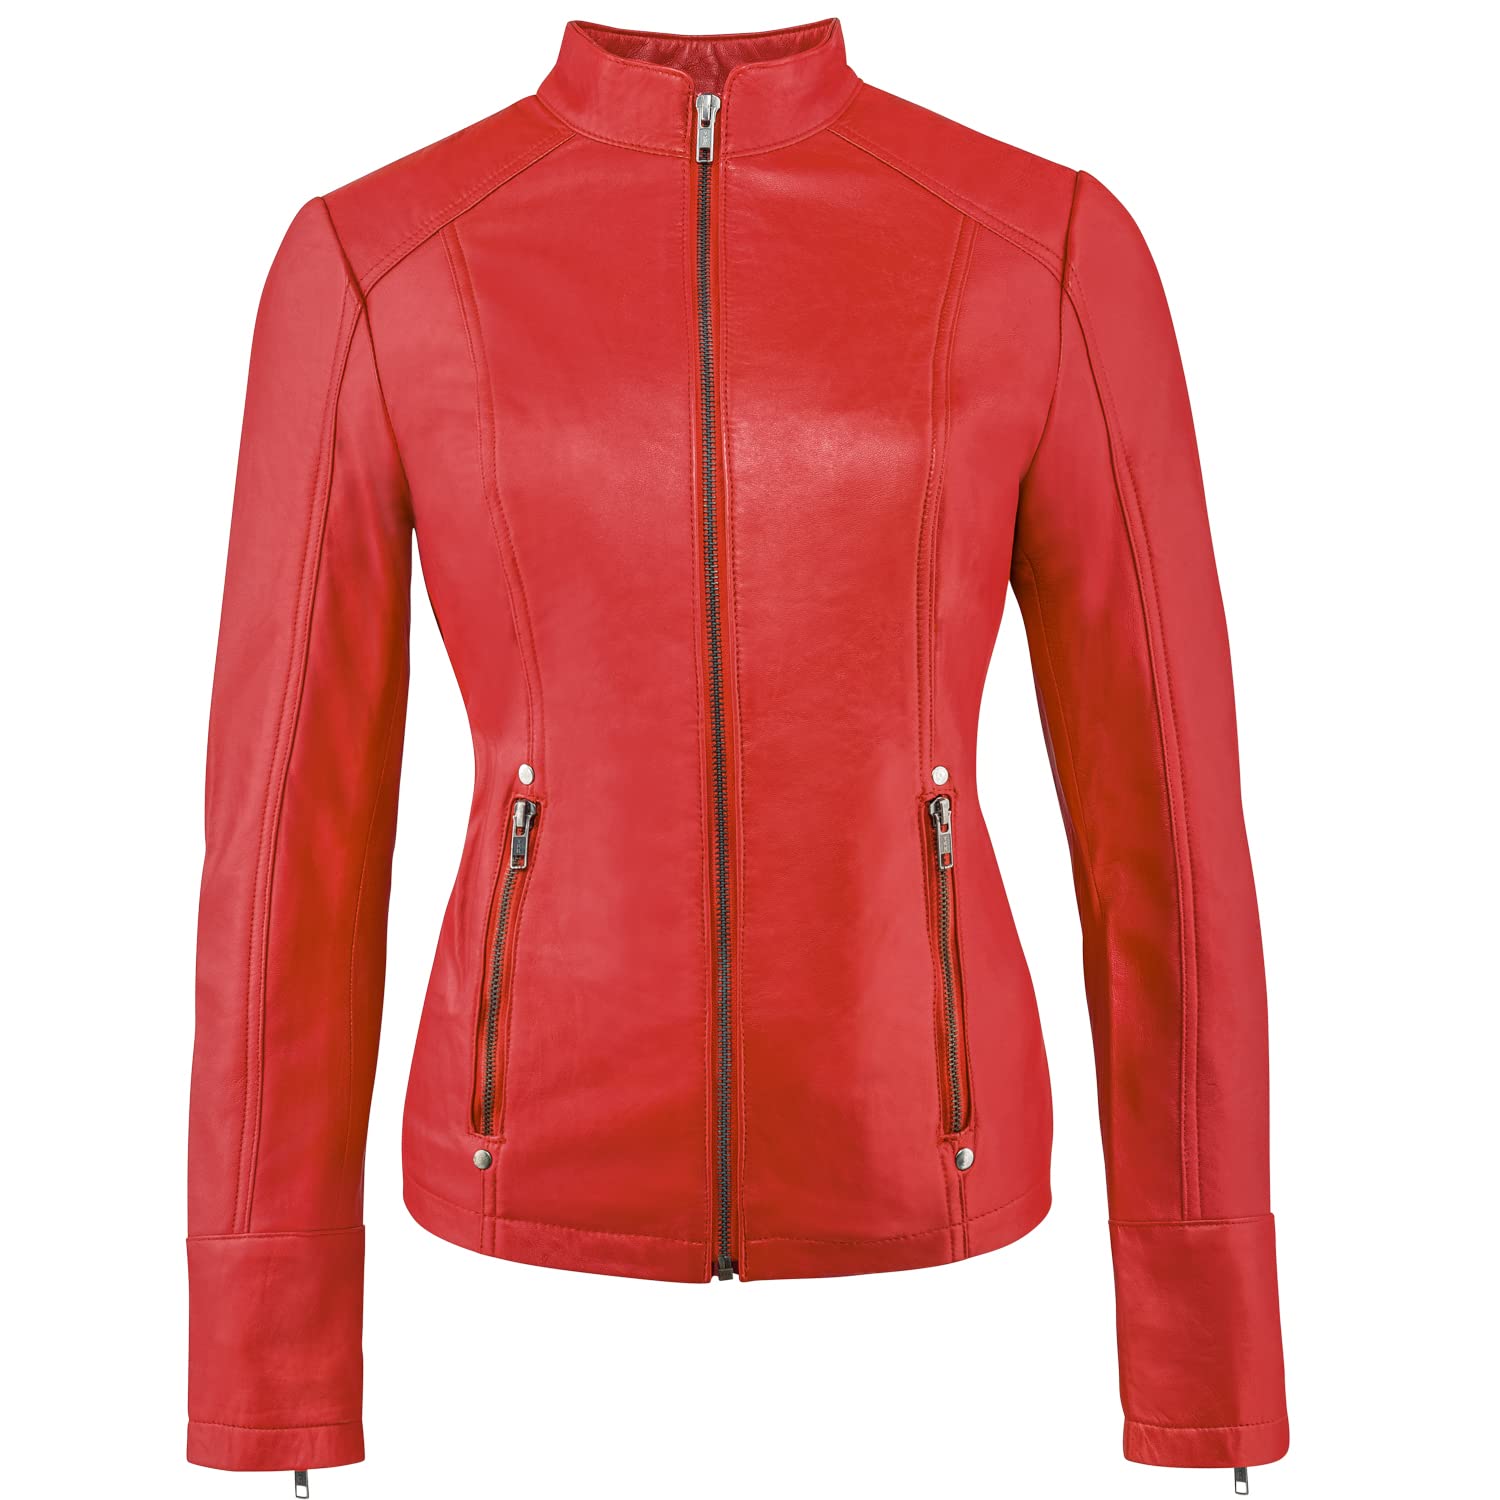 Urban Leather Fashion Lederjacke - Rt01, Rot, Größe 40, Large von URBAN 5884